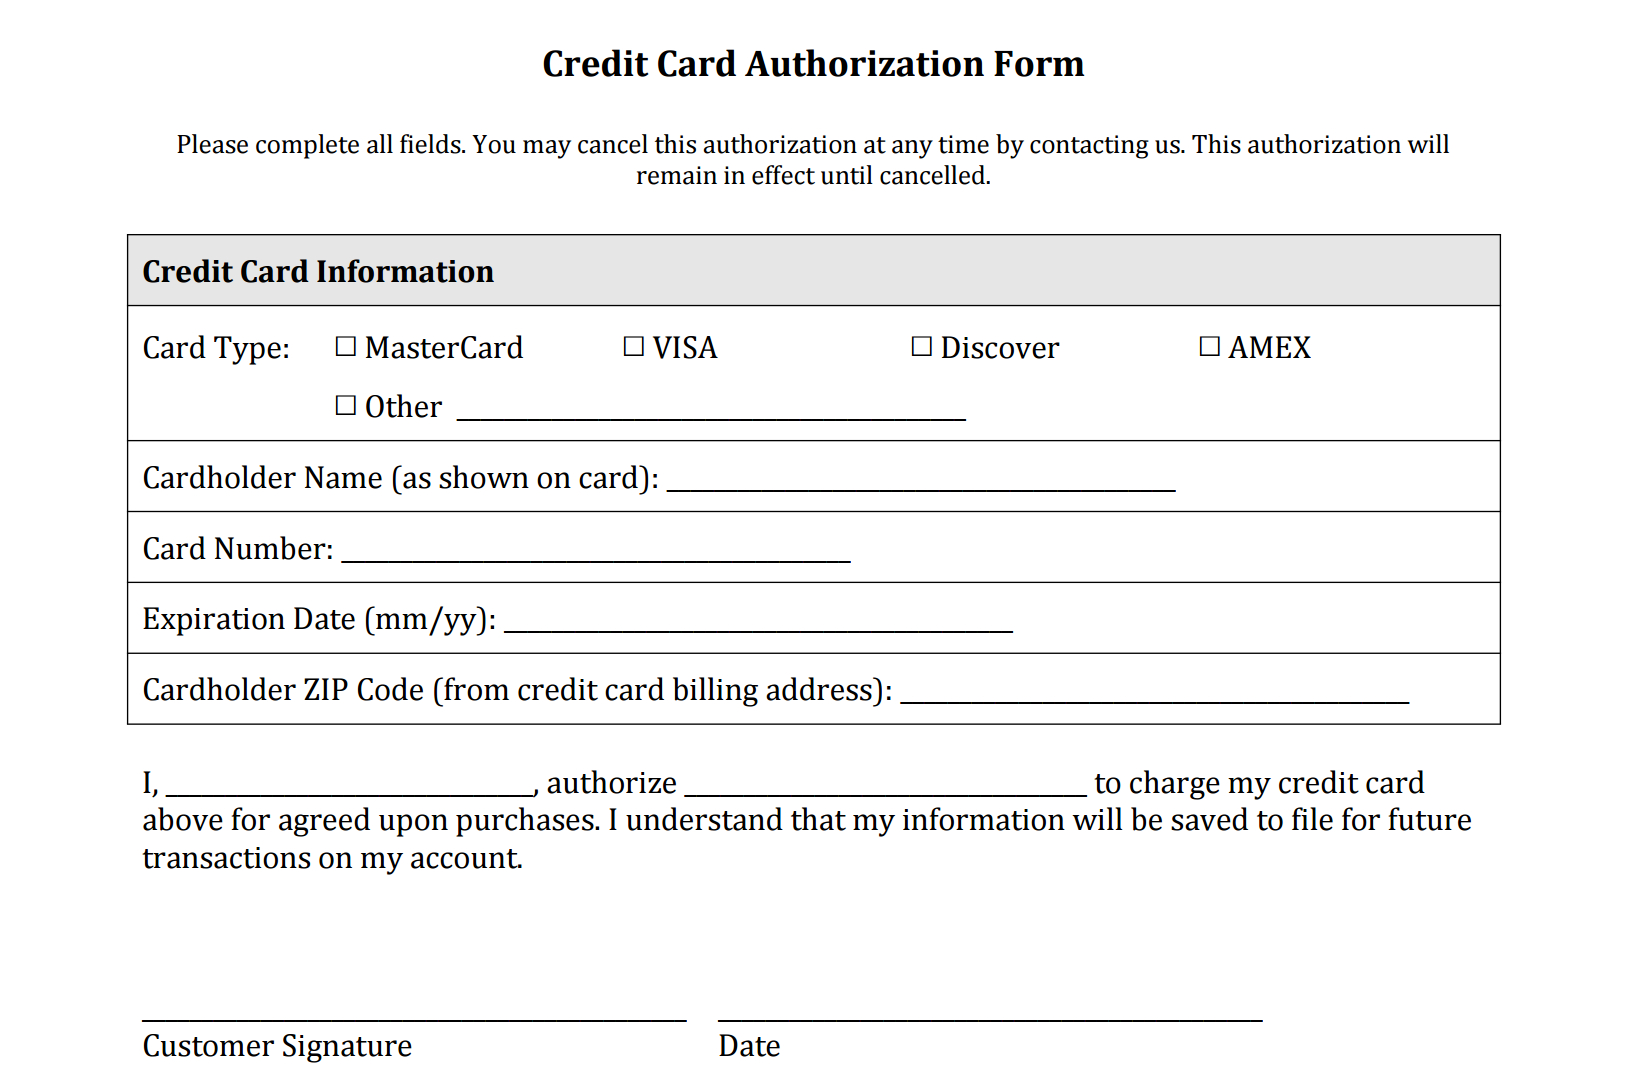 Credit Card Authorisation Form Template Australia - Calep For Credit Card Authorisation Form Template Australia